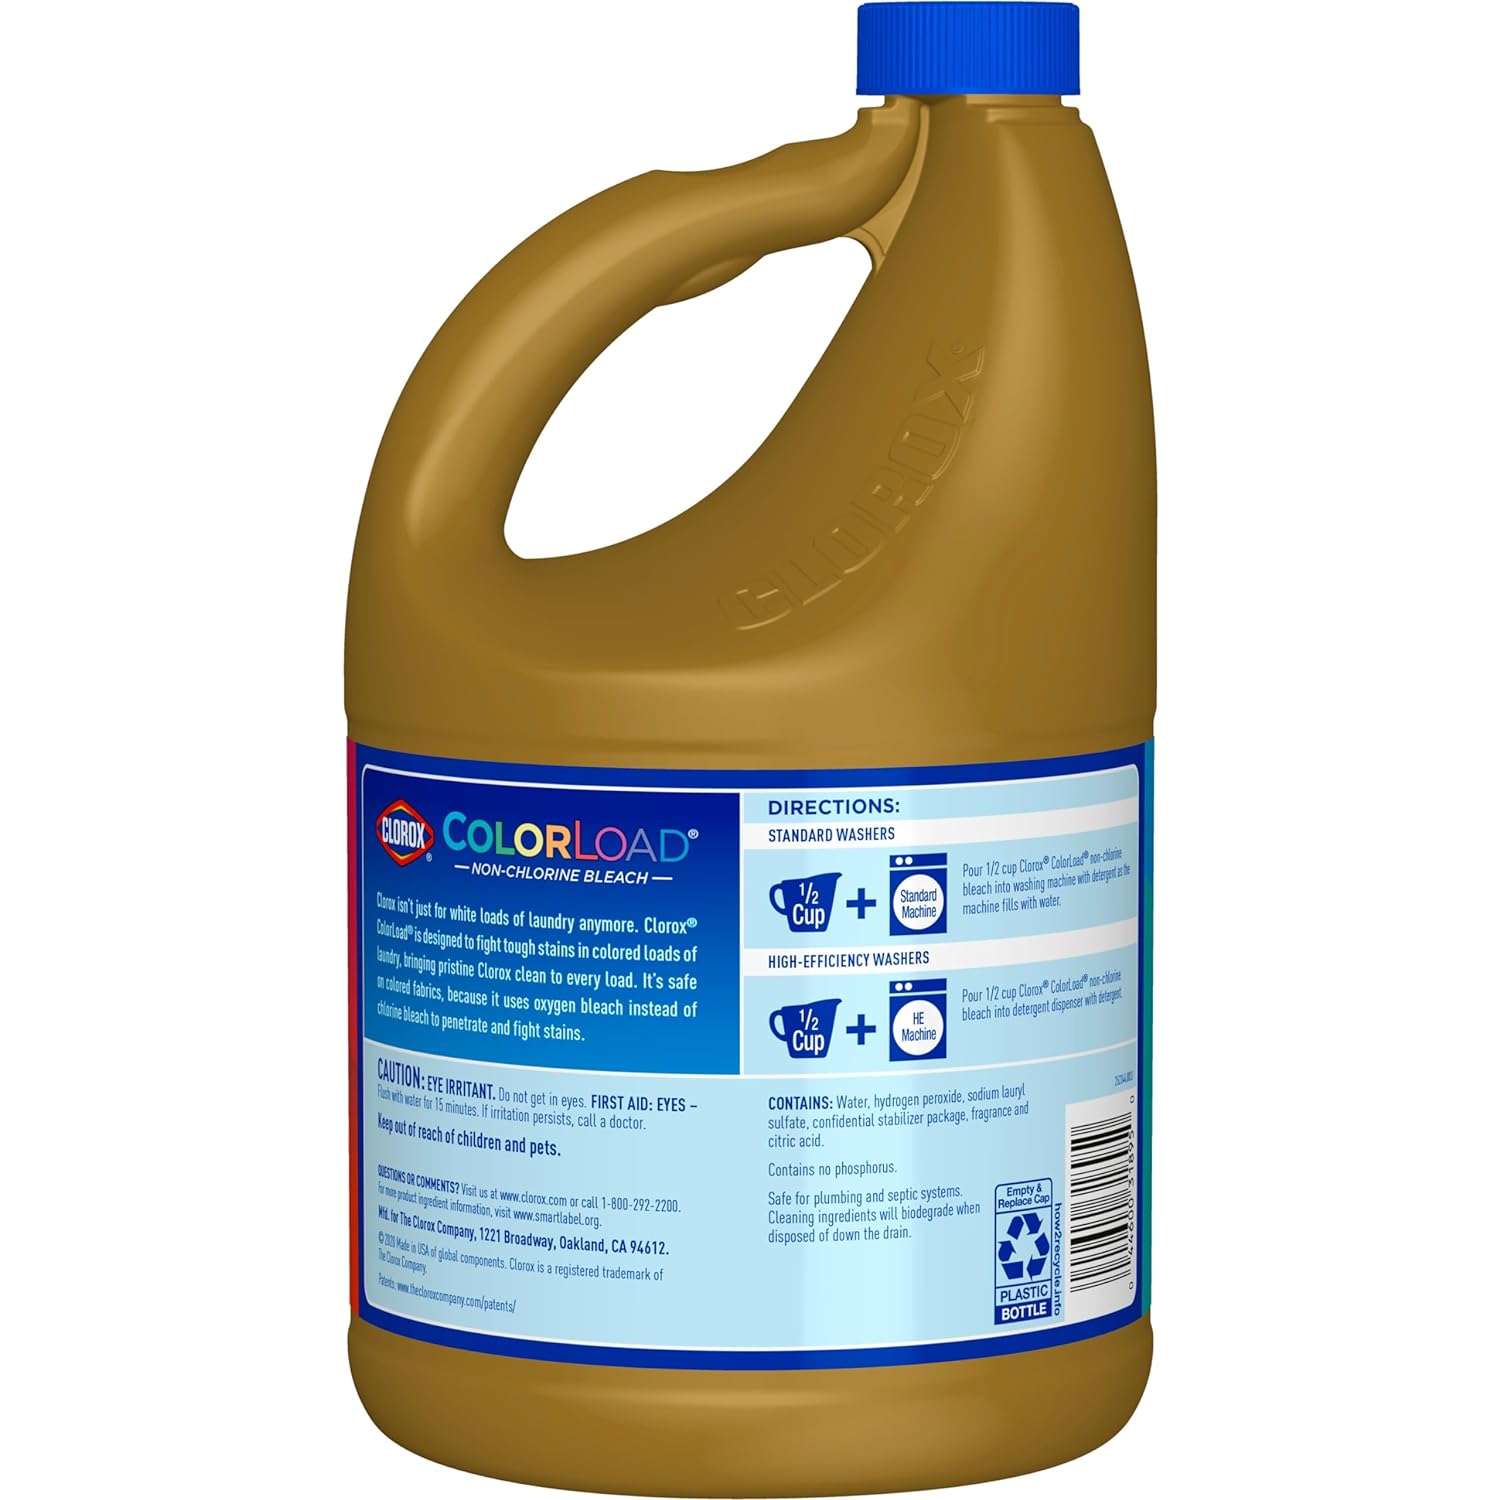 Clorox ColorLoad Non-Chlorine Bleach, 116 Ounce Bottle : Health & Household